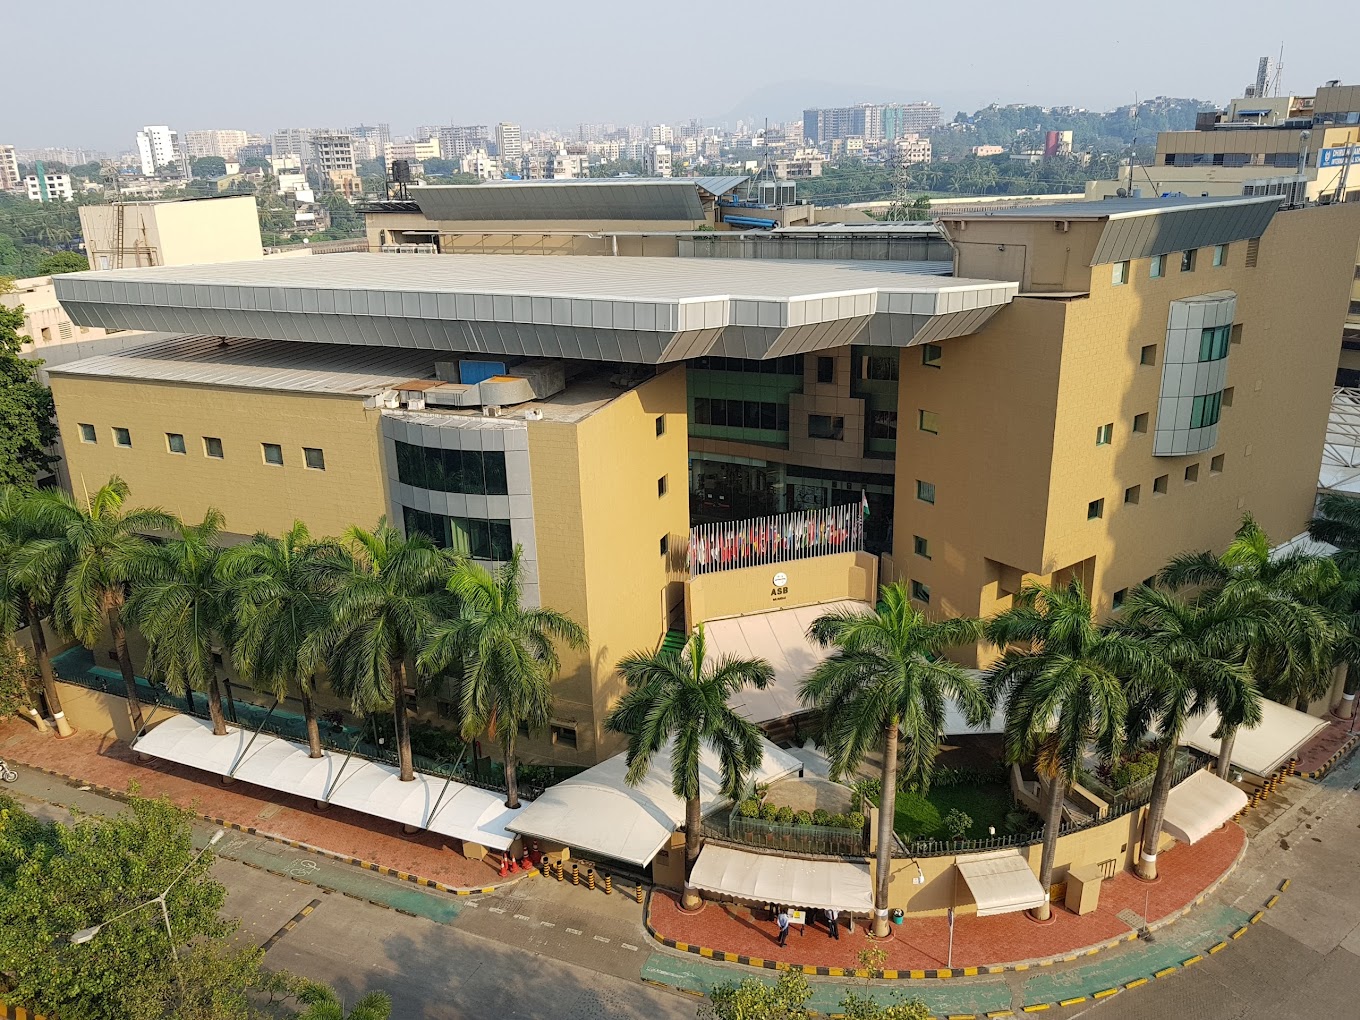 American School of Bombay